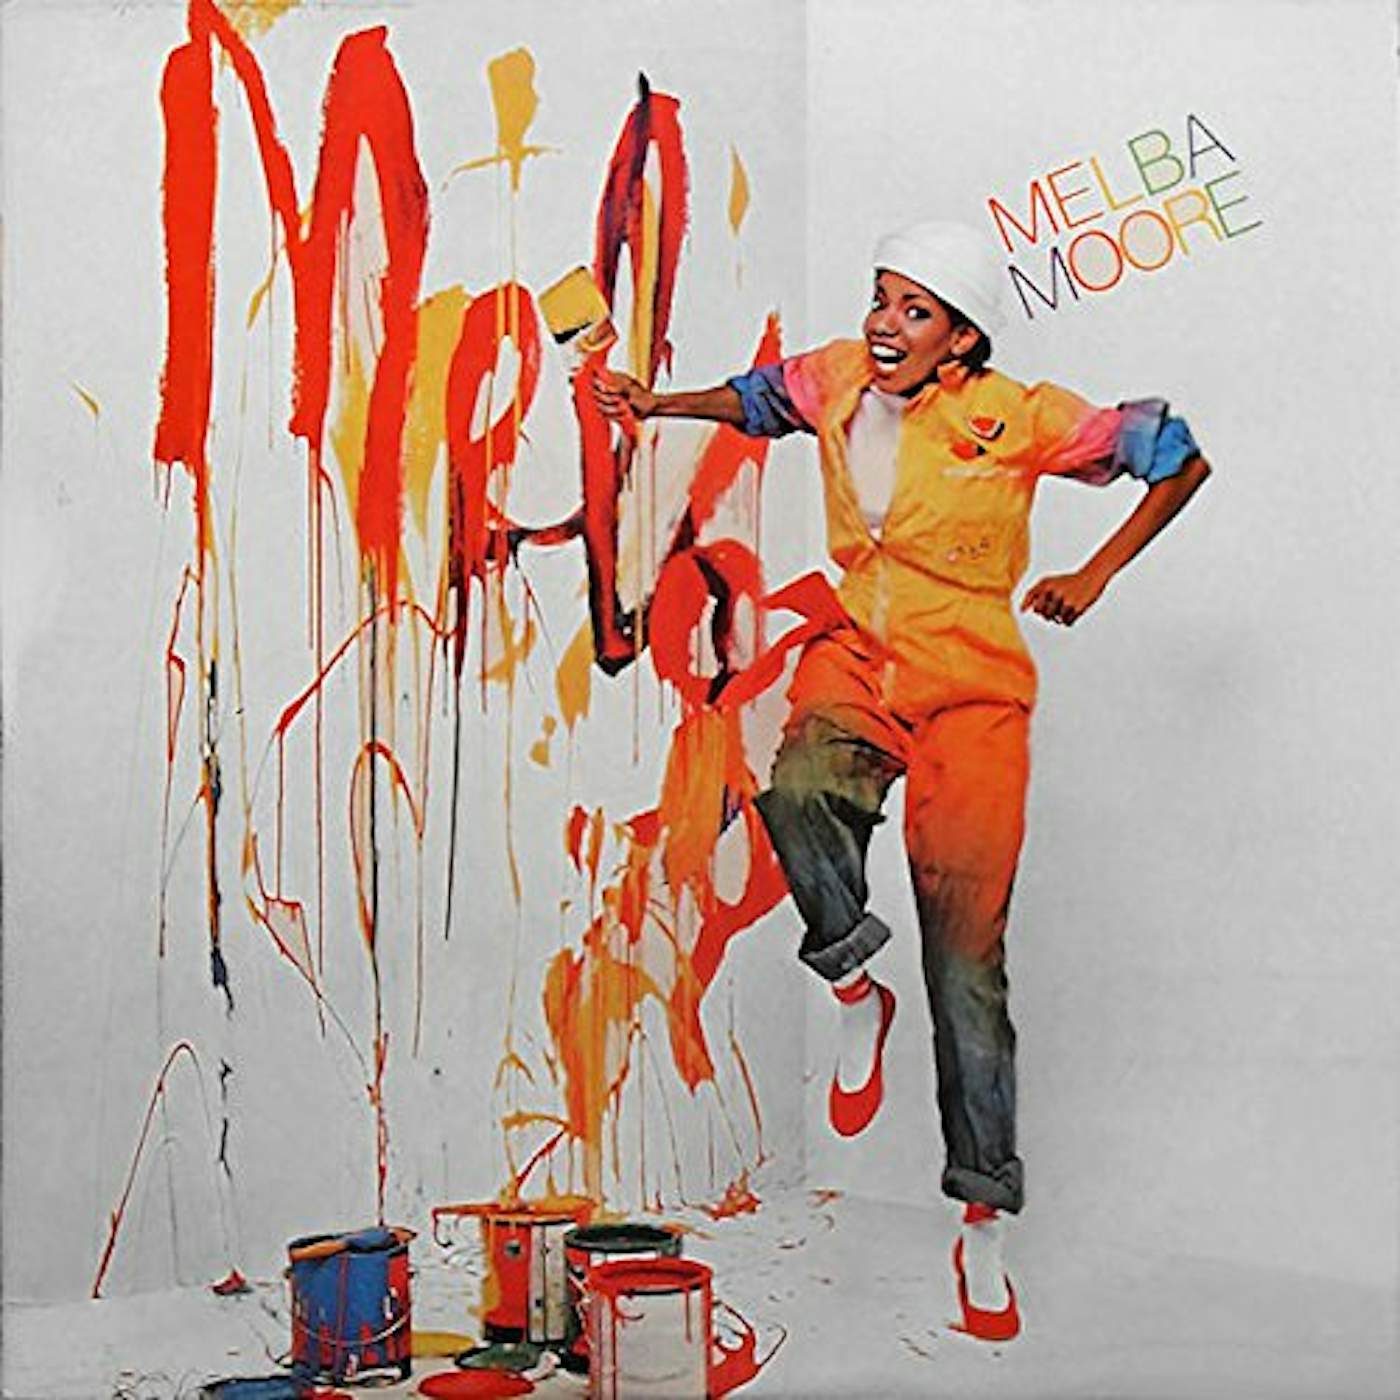 Melba Moore MELBA CD